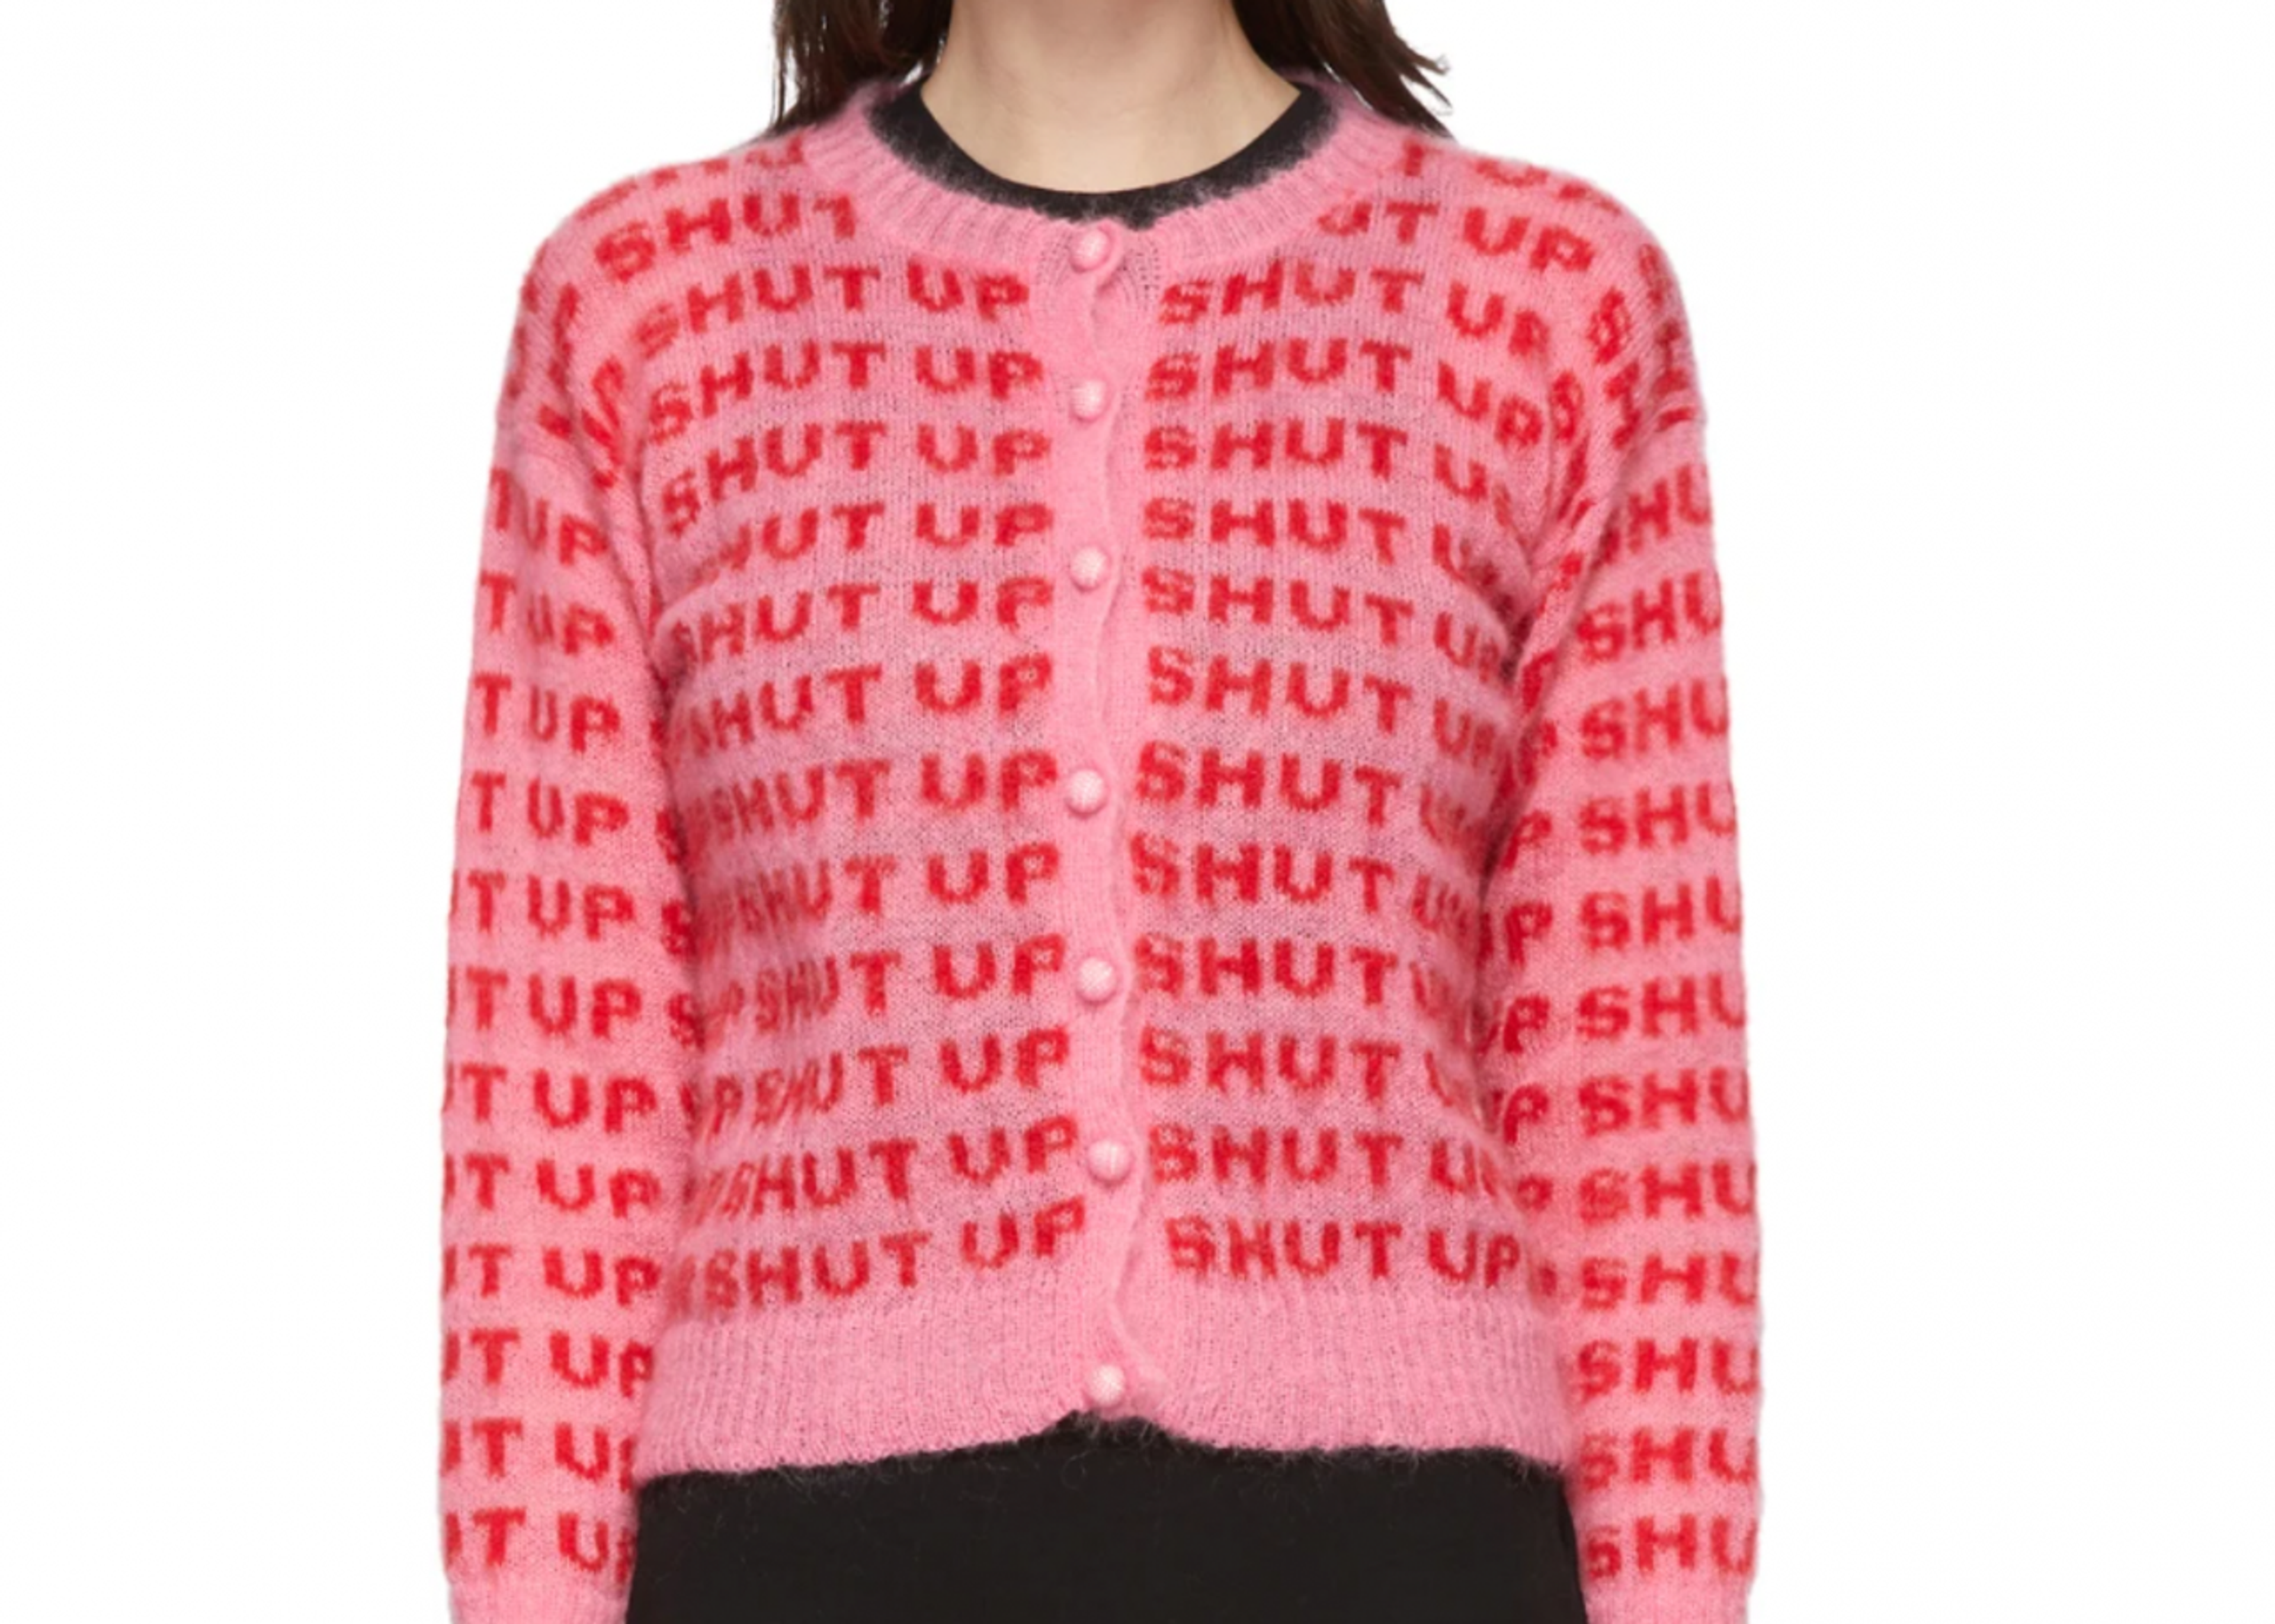 Shut-Up Sweater by Ashley Williams